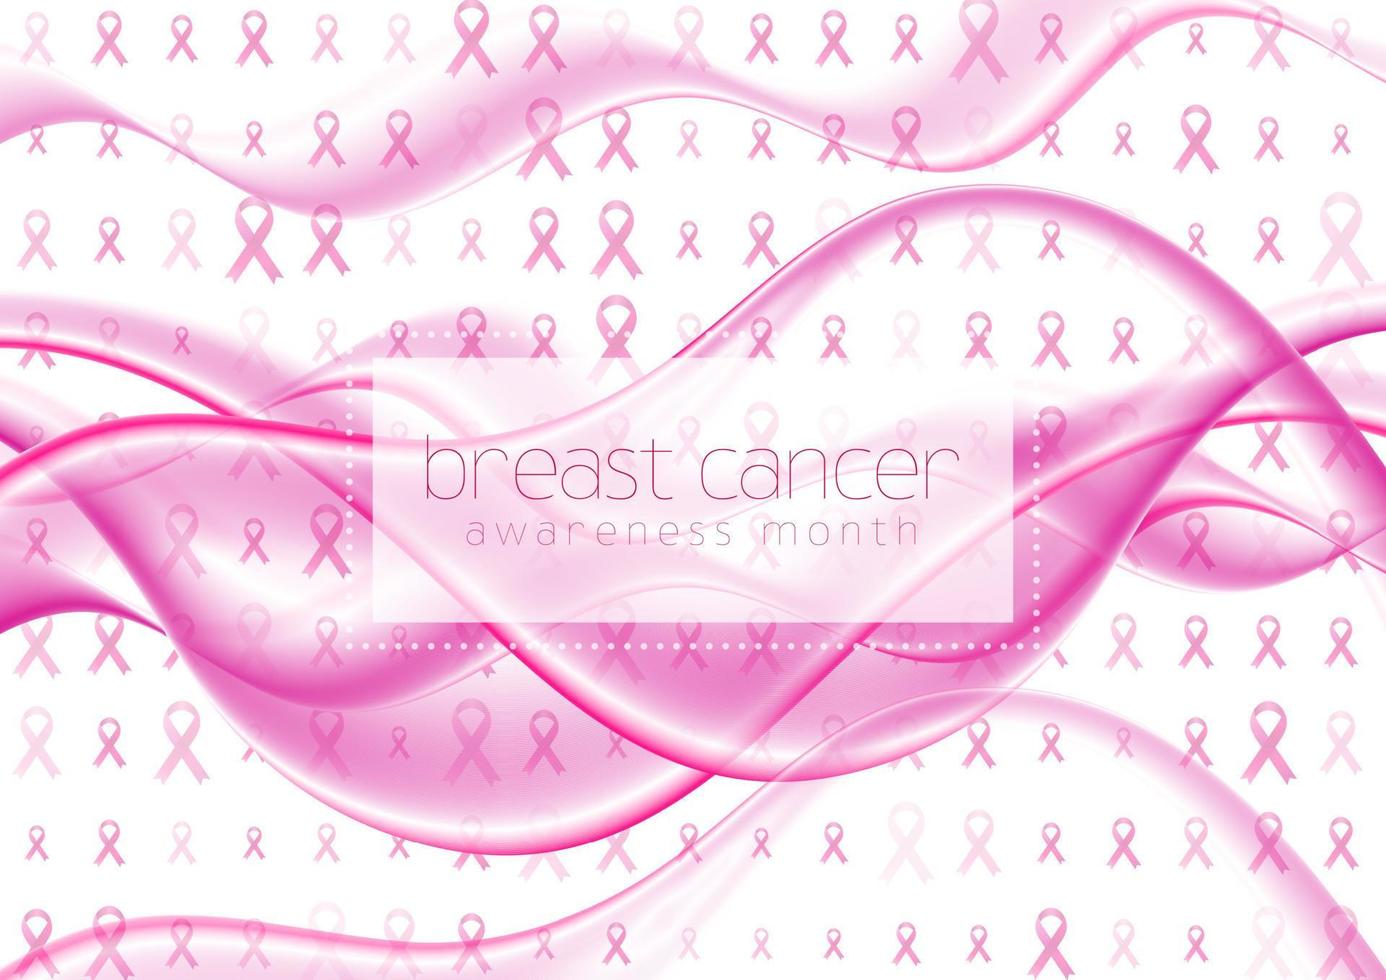 borst kanker bewustzijn maand. glad abstract golven en roze lint plakband achtergrond vector